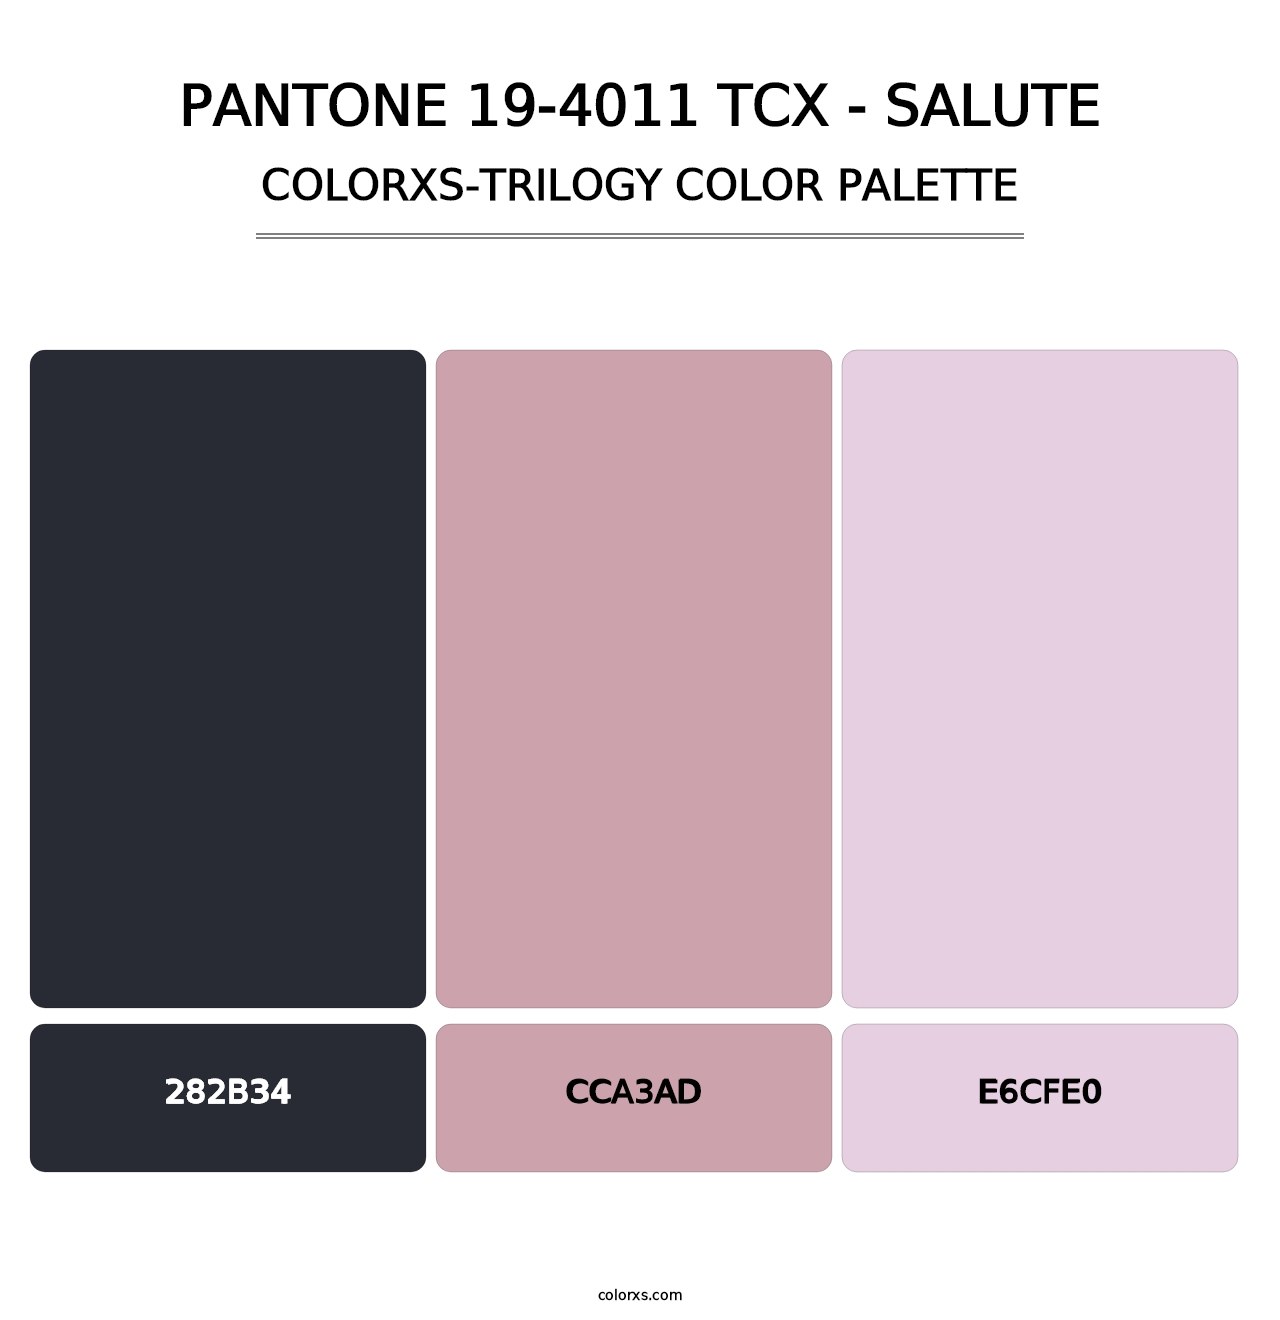 PANTONE 19-4011 TCX - Salute - Colorxs Trilogy Palette